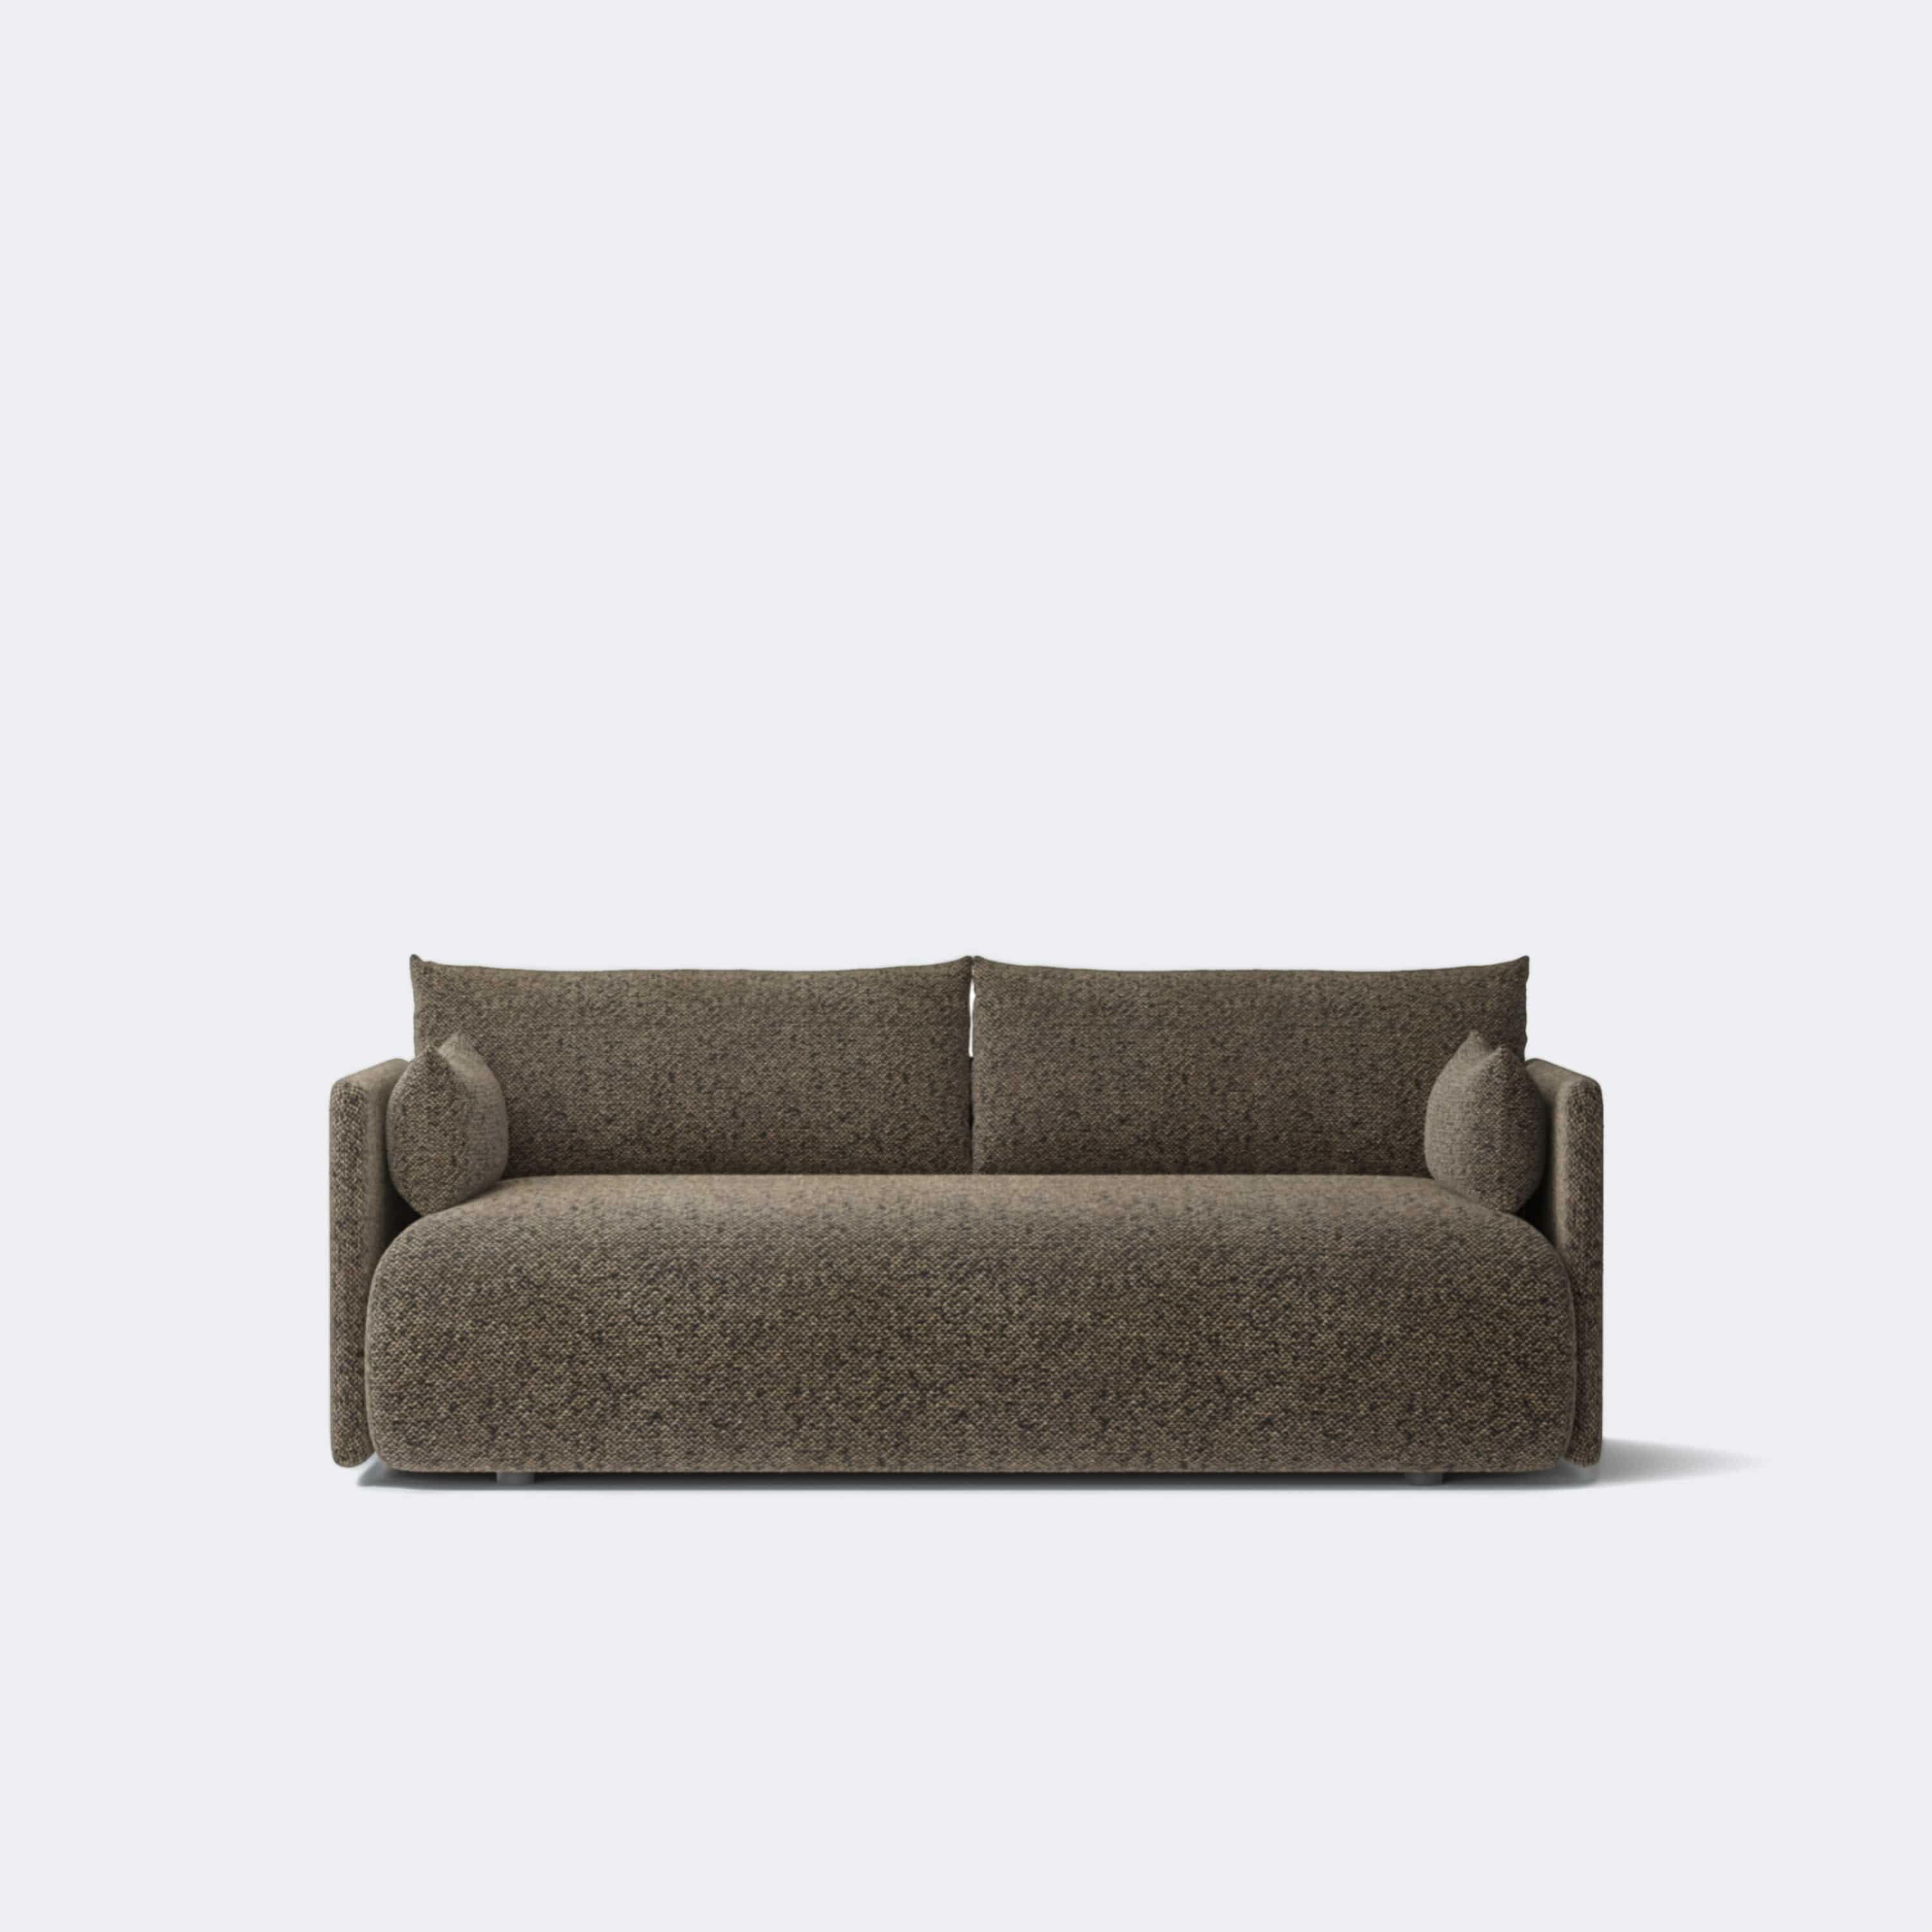 Audo Copenhagen Offset Sofa, 2 Seater Made To Order (12-14 Weeks) Safire #001 - KANSO